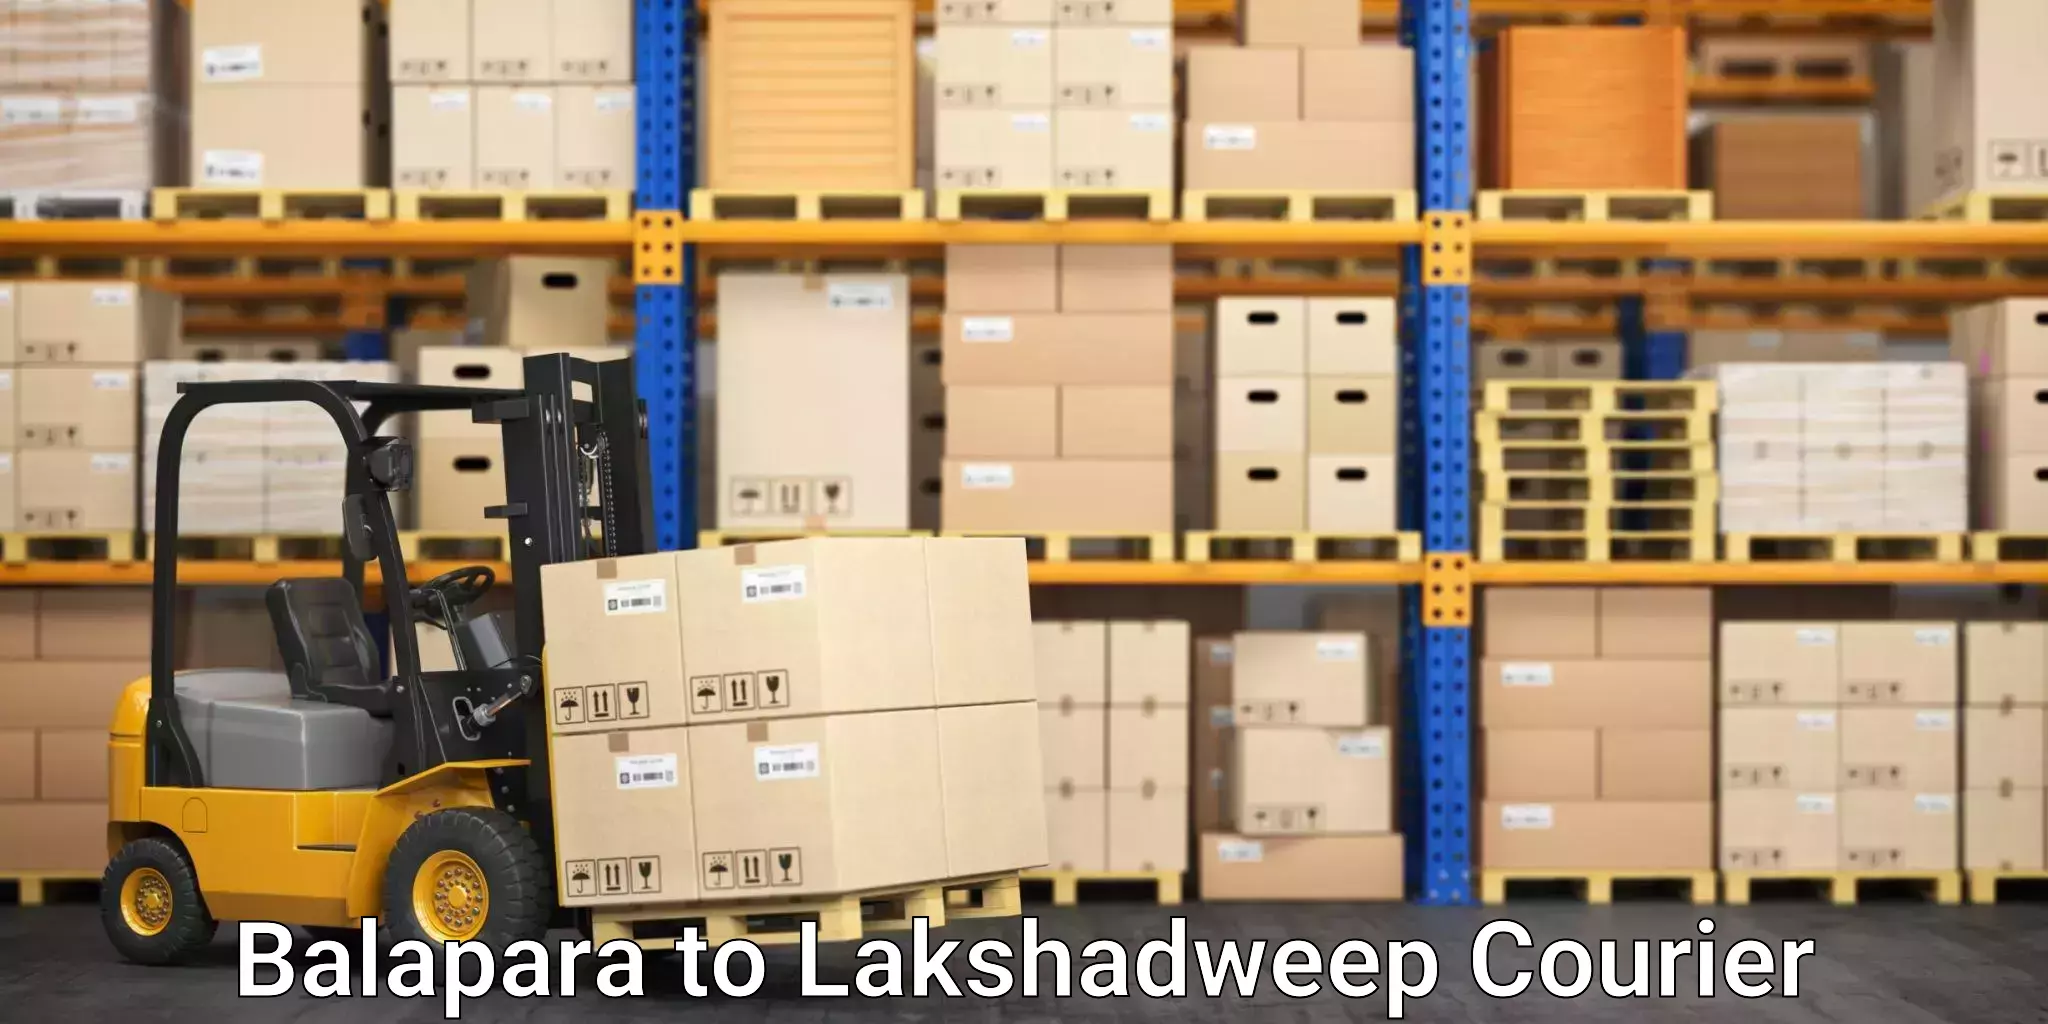 Courier tracking online Balapara to Lakshadweep